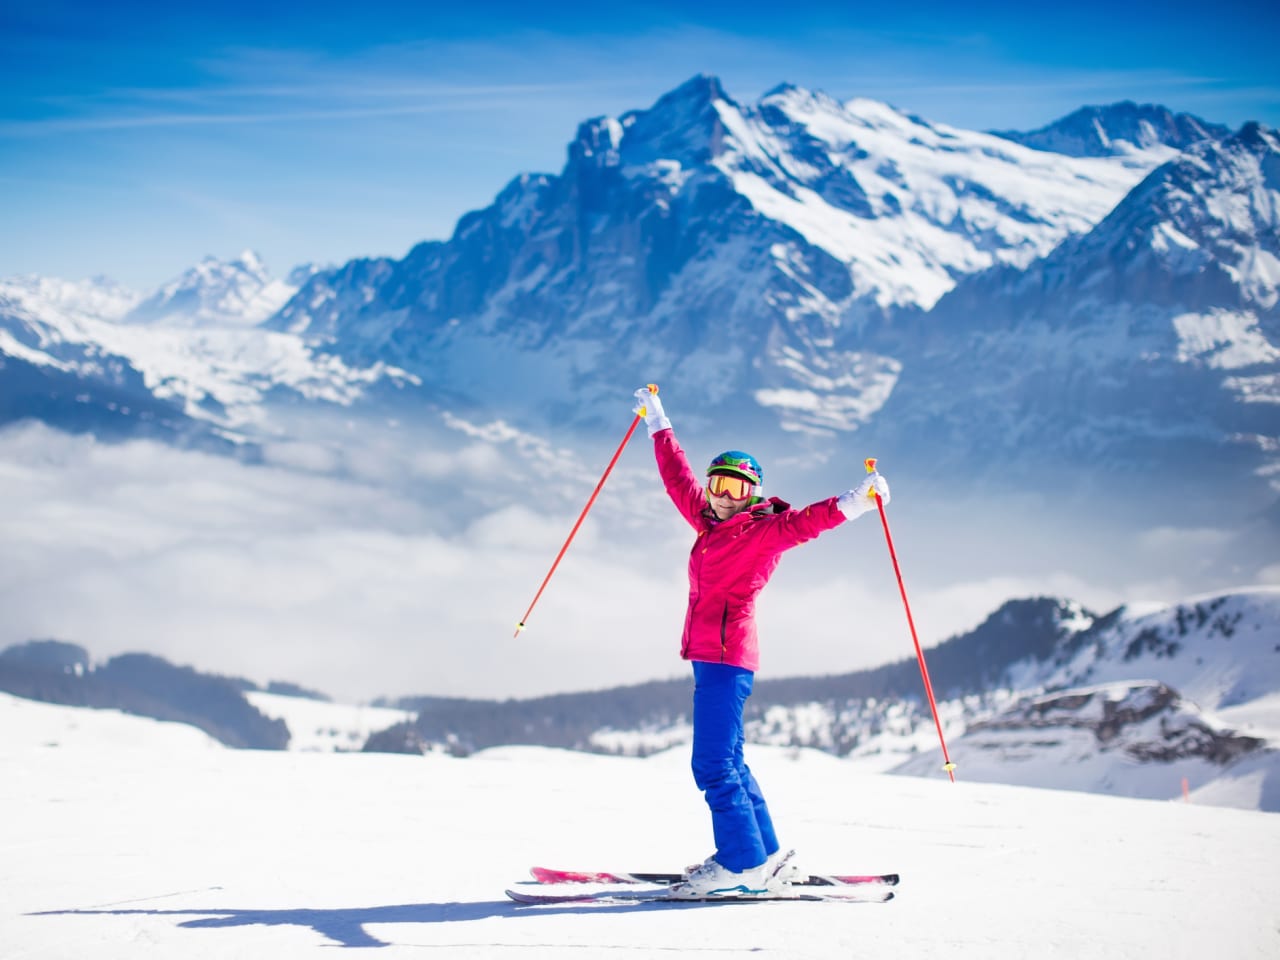 Skifahren in der Schweiz © FamVeld/iStock / Getty Images Plus via Getty Images